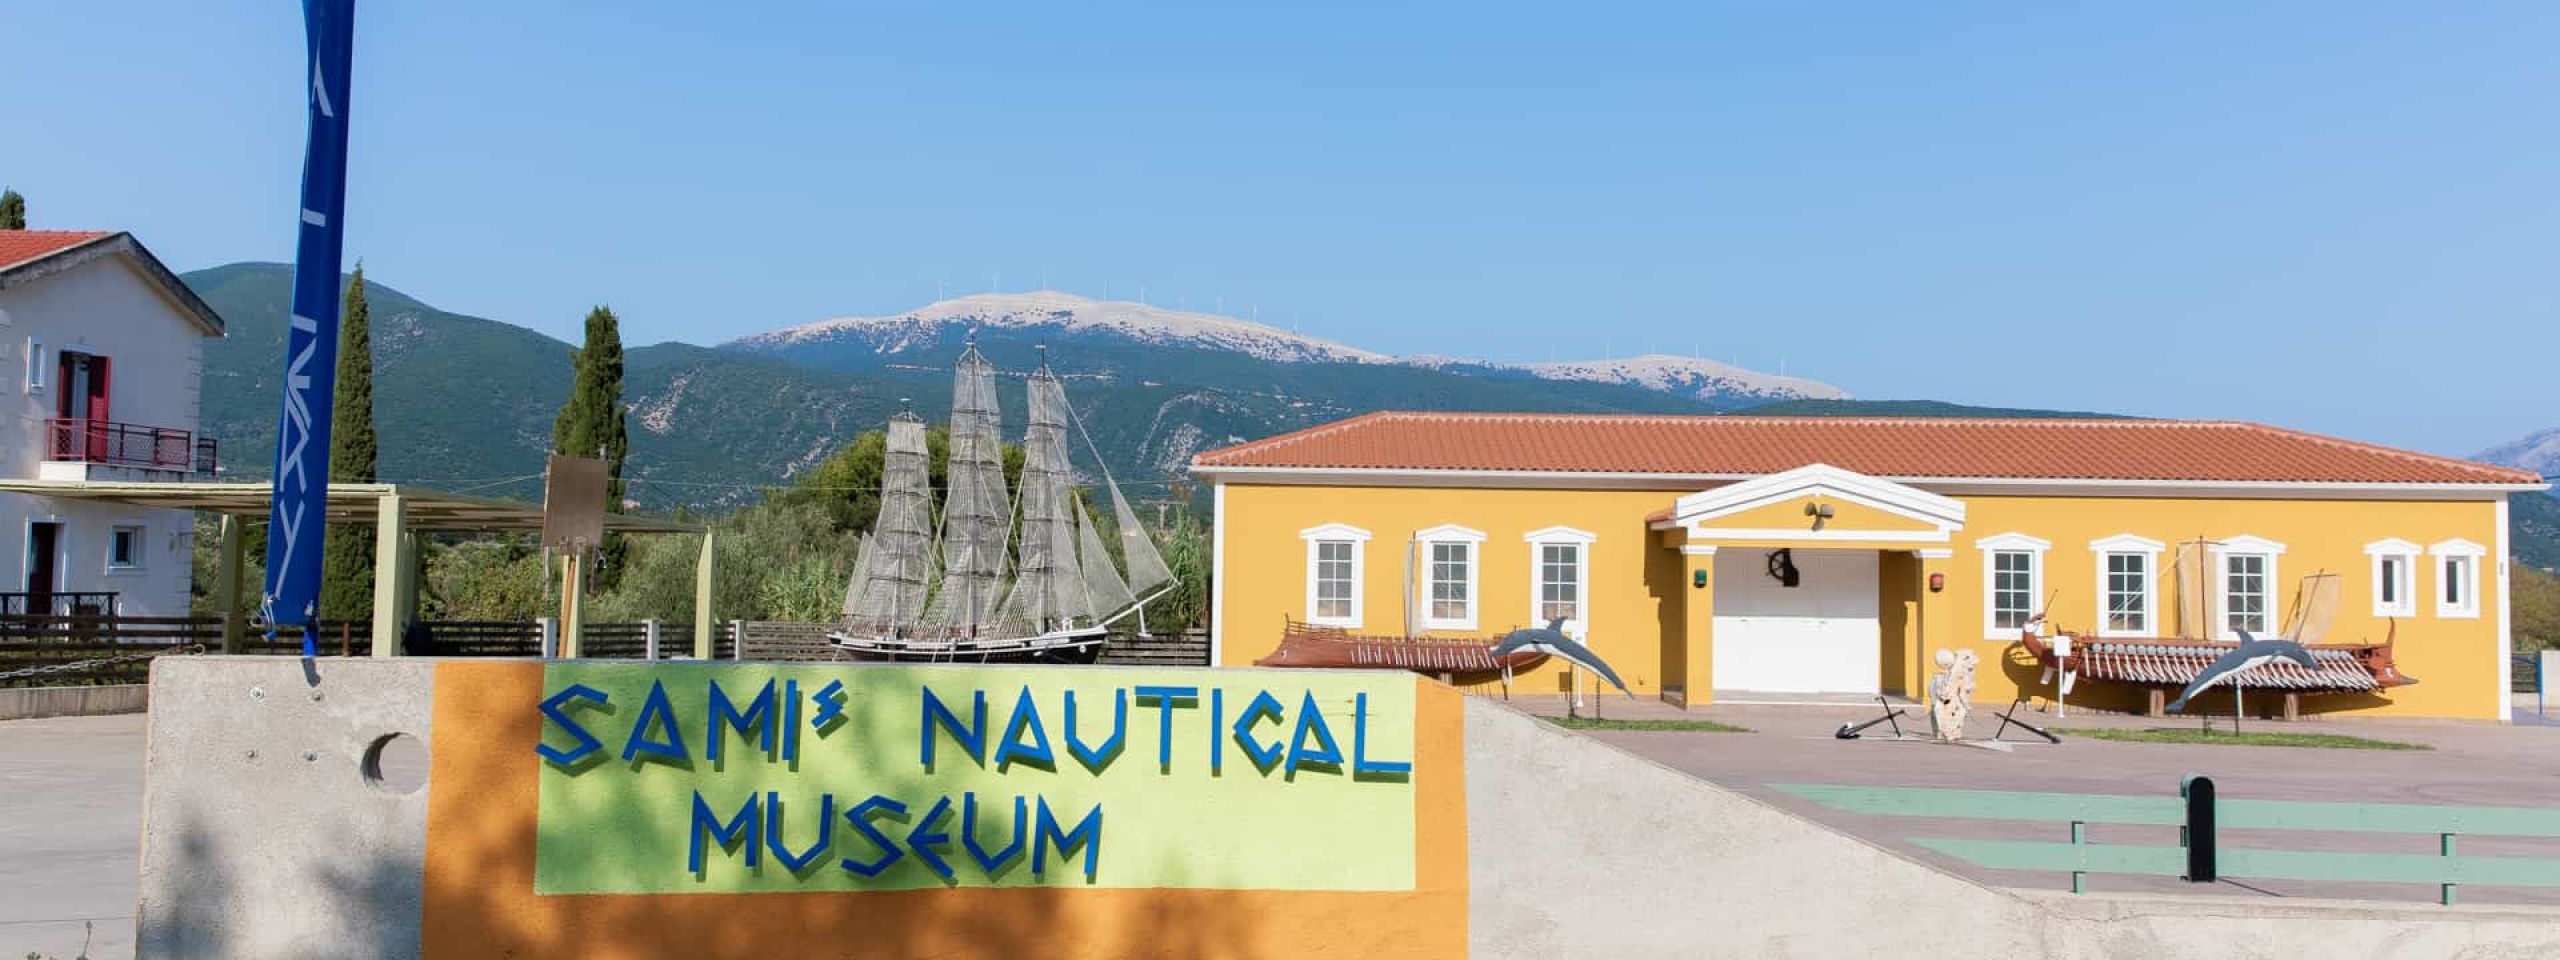  Nautical Museum of Sami